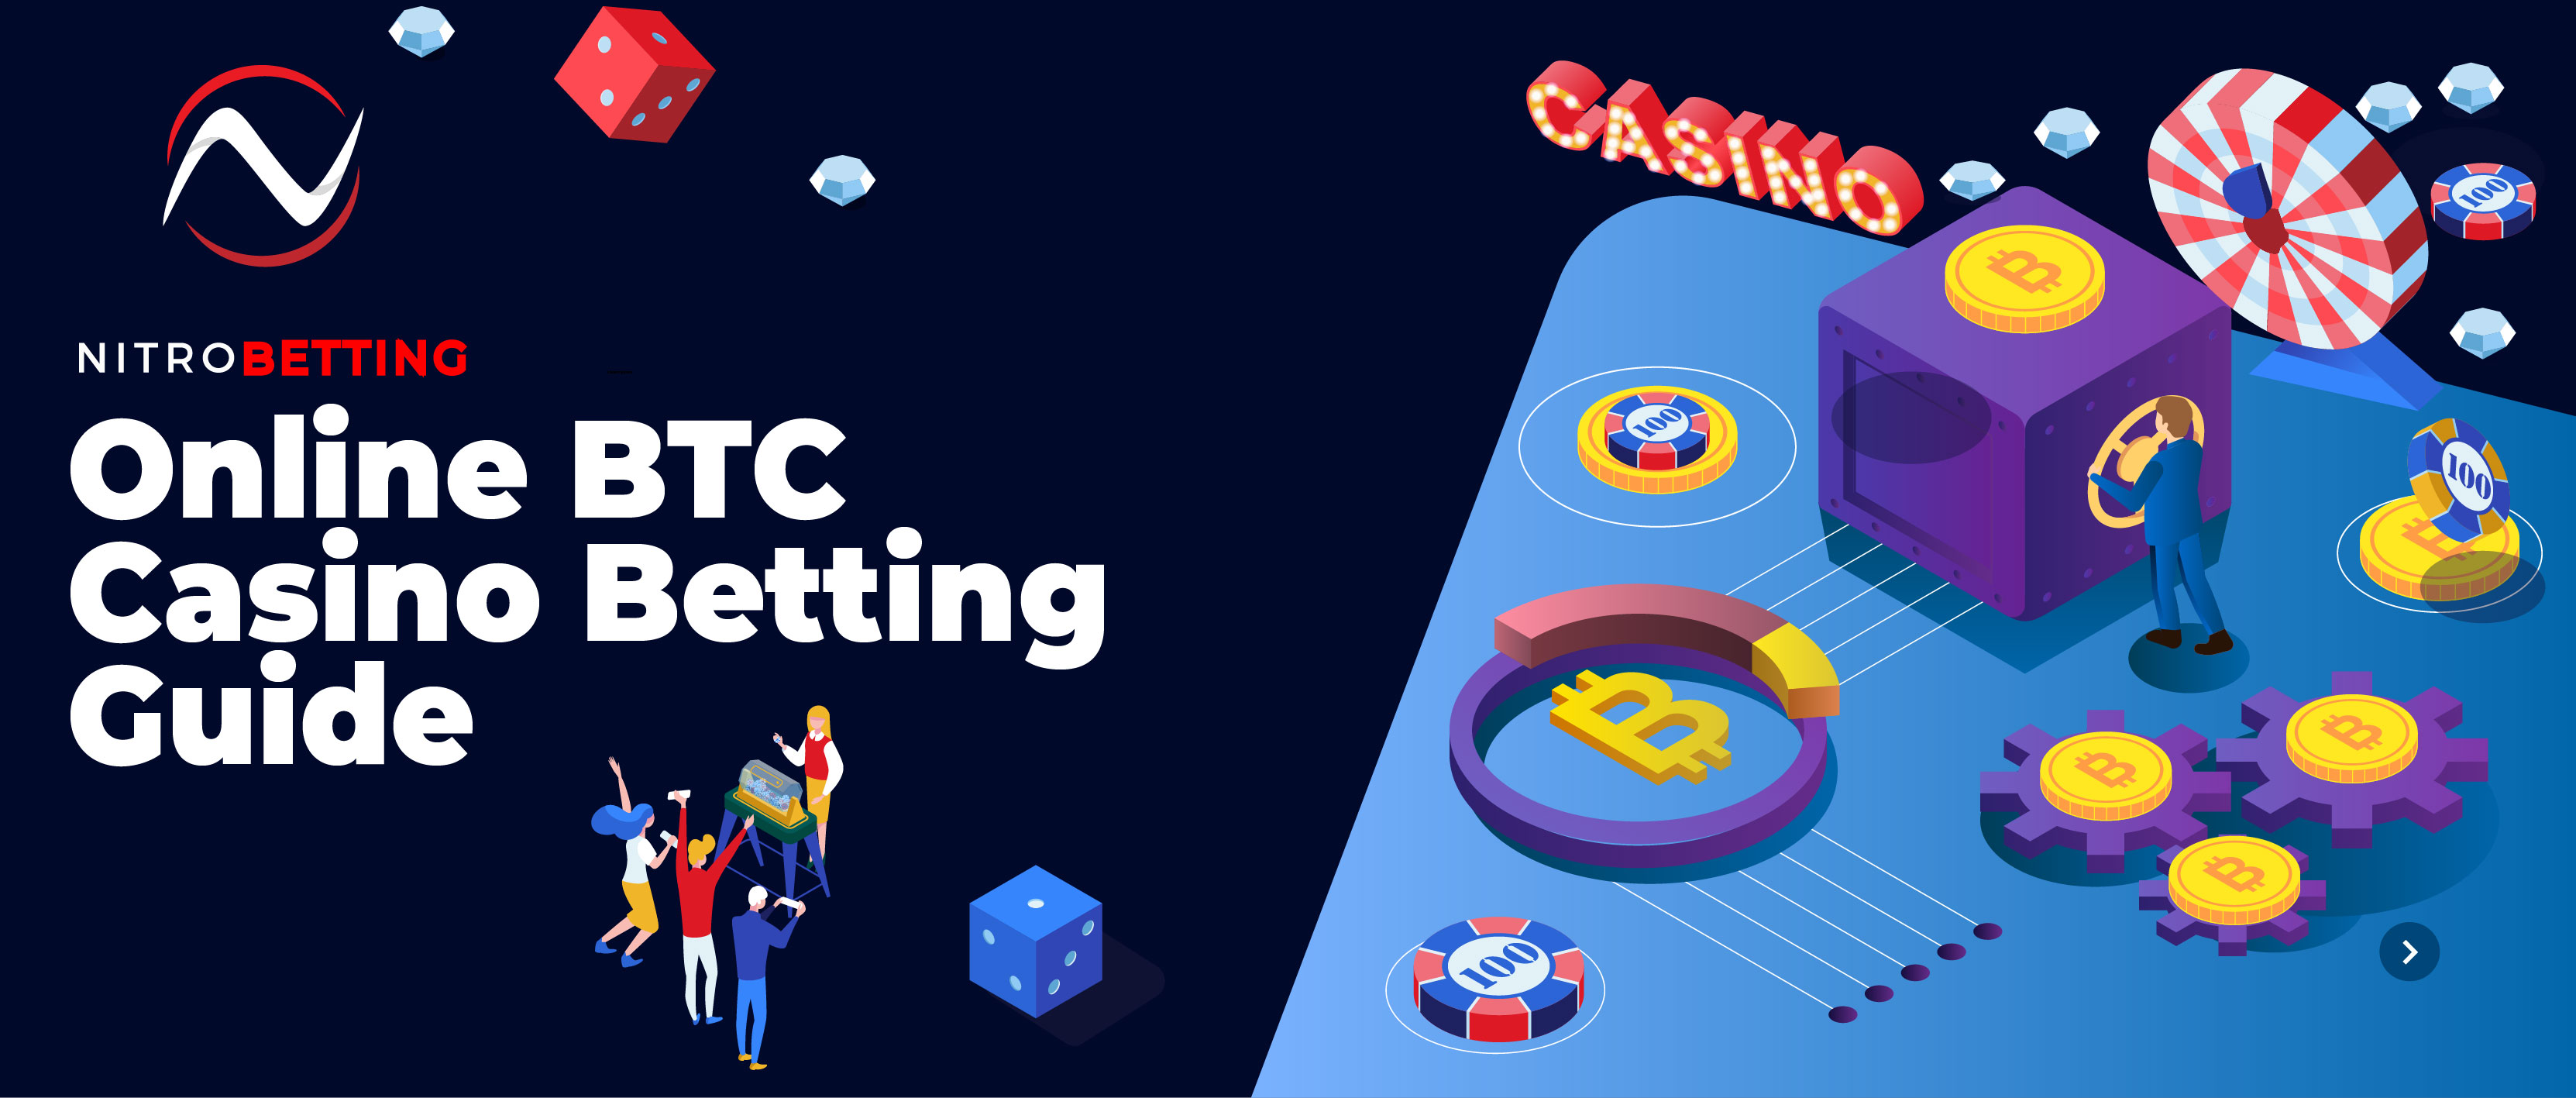 Online Bitcoin Casino Betting Guide